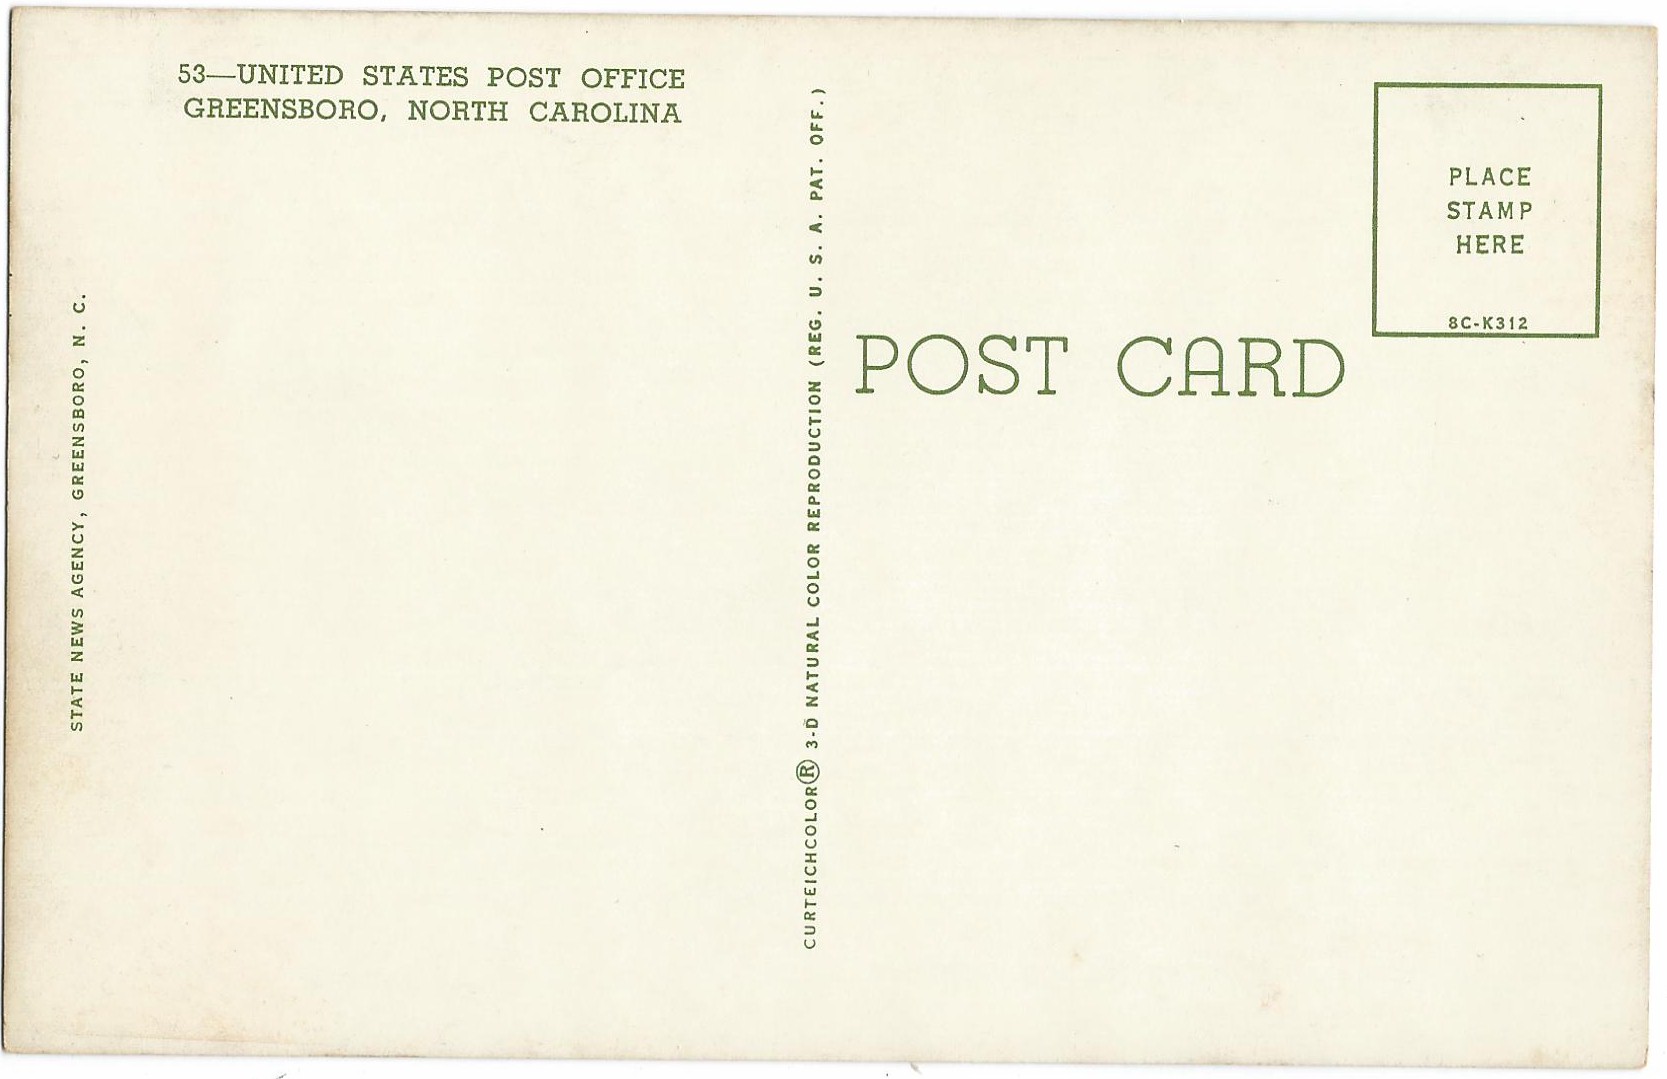 Post Office Greensboro, North Carolina Postcard 53 8C-K312 (NC)